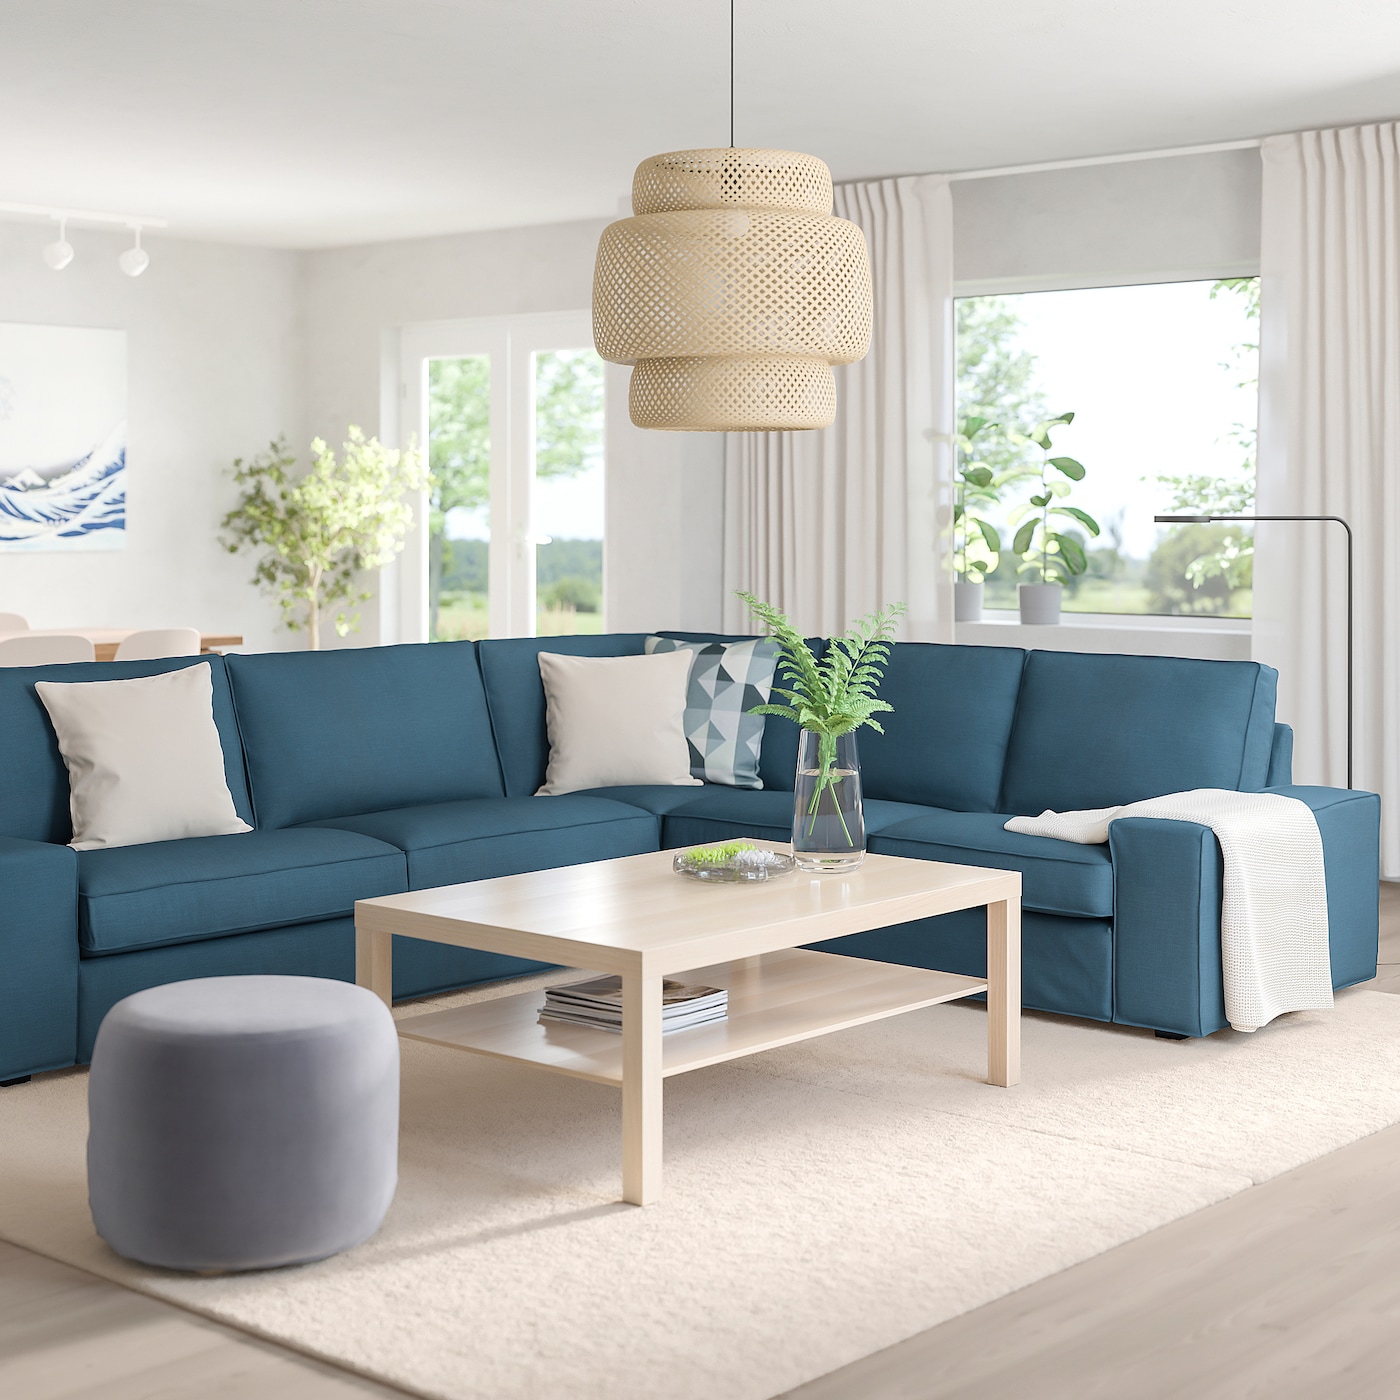 Modern-KIVIC-sofa-from-IKEA-70907